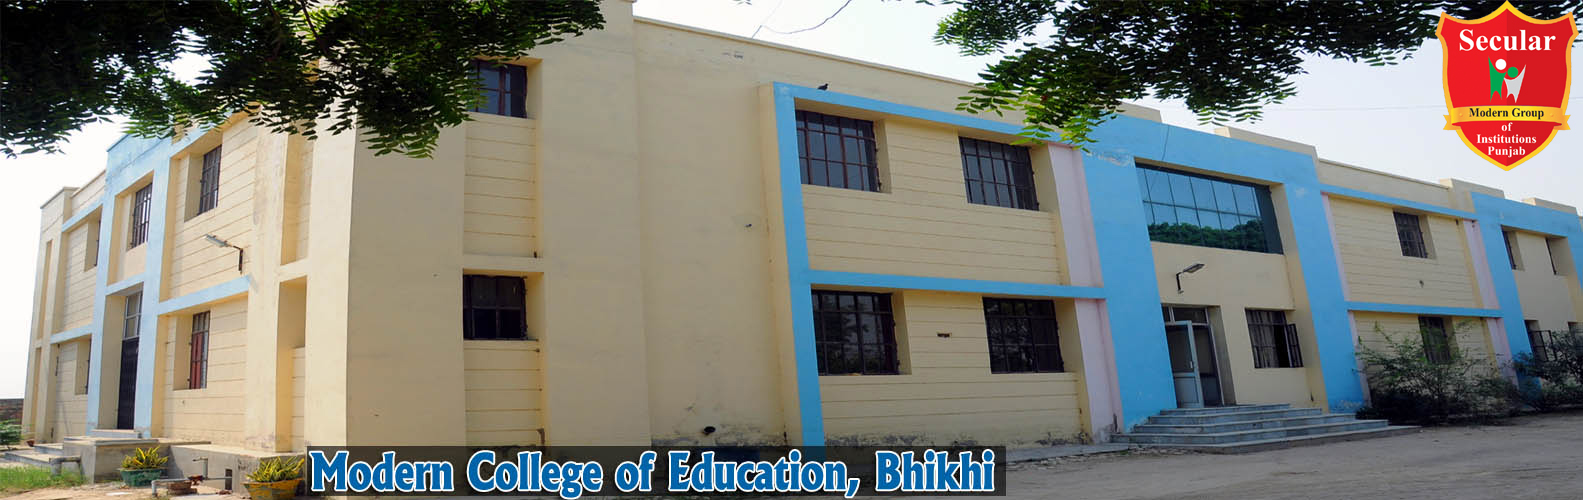 Modern College of Education, Bhikhi